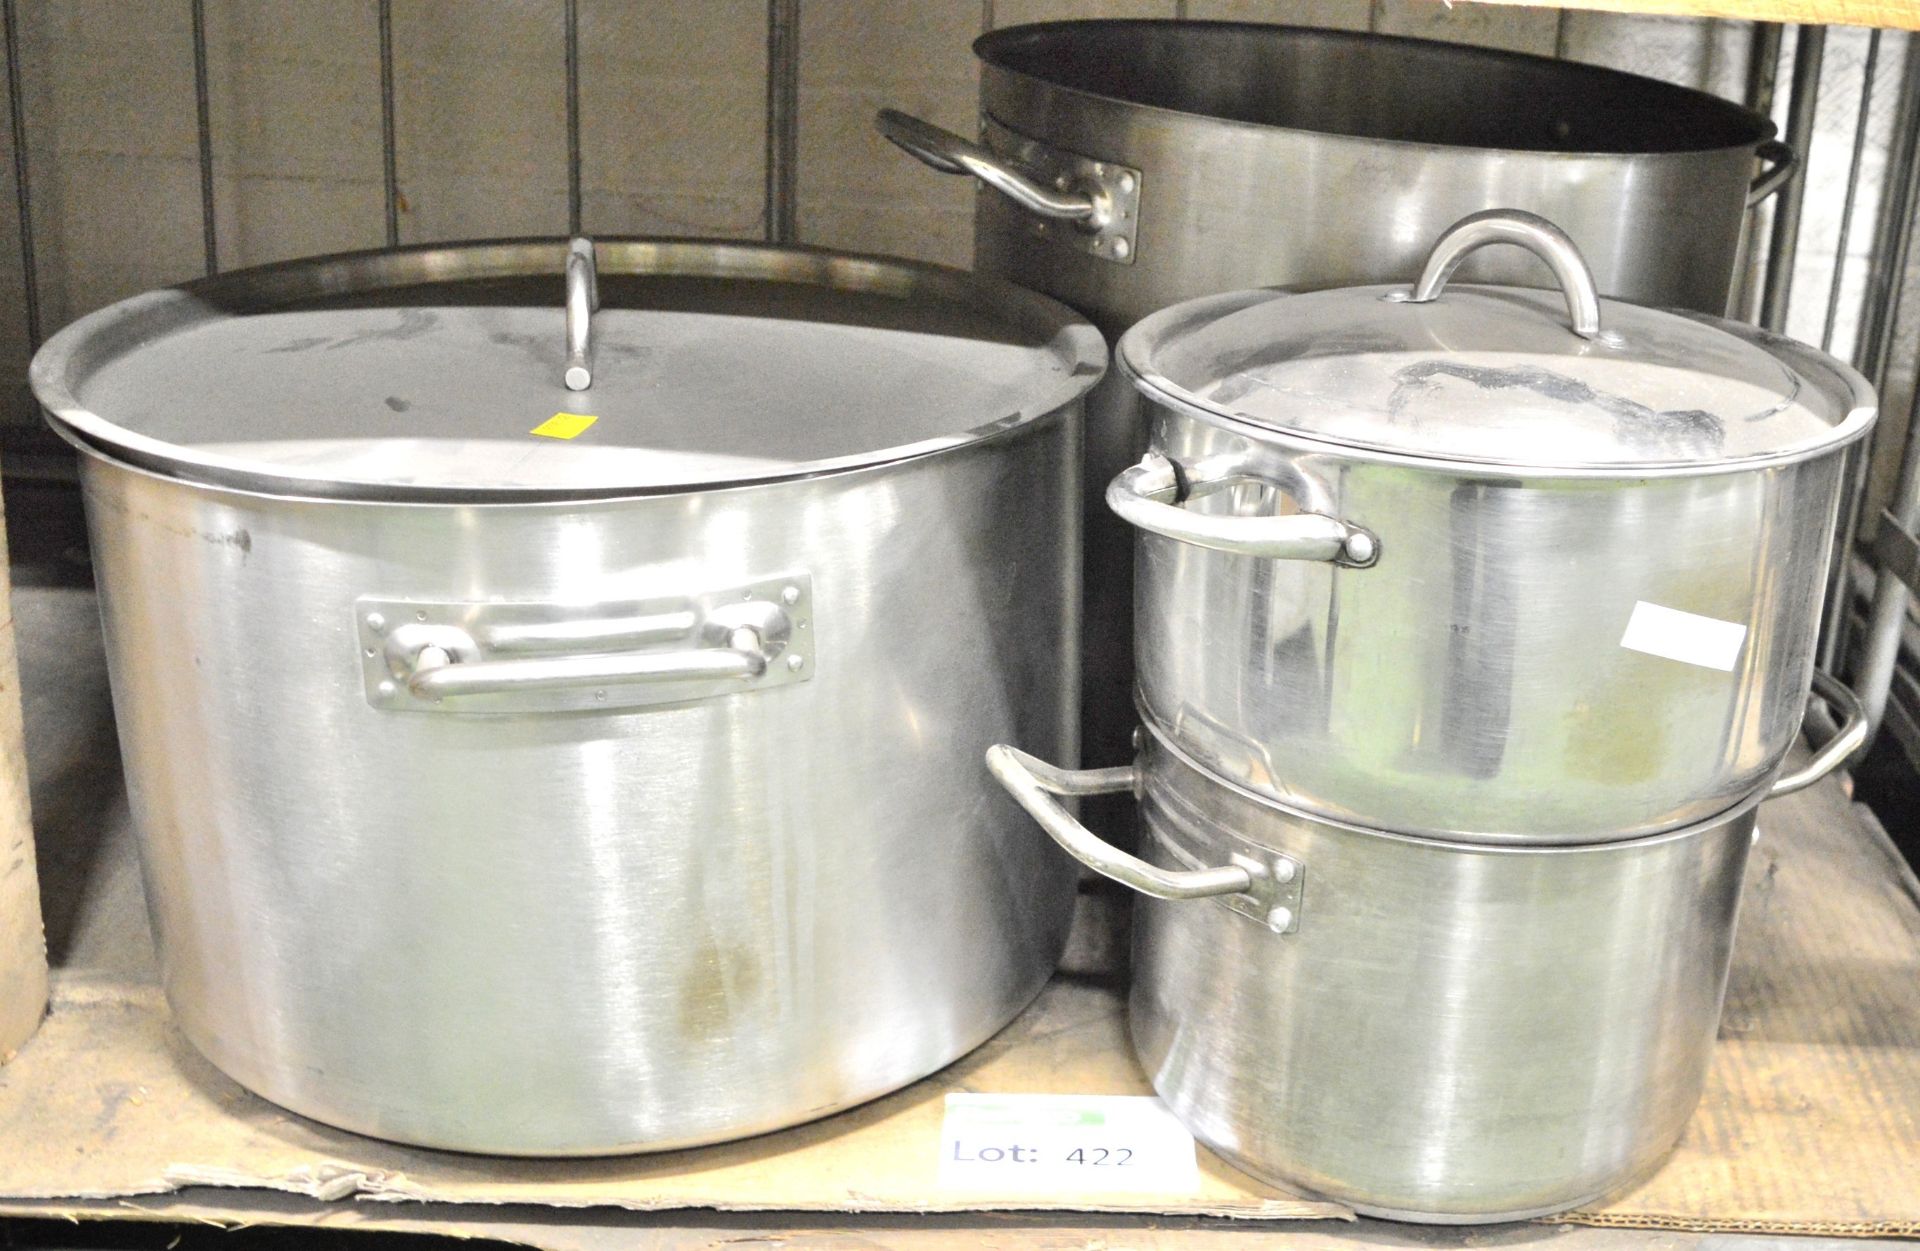 31 Litre Heavy Pan. 7.2 Gallon Pot. 2x Small Cooking Pot.